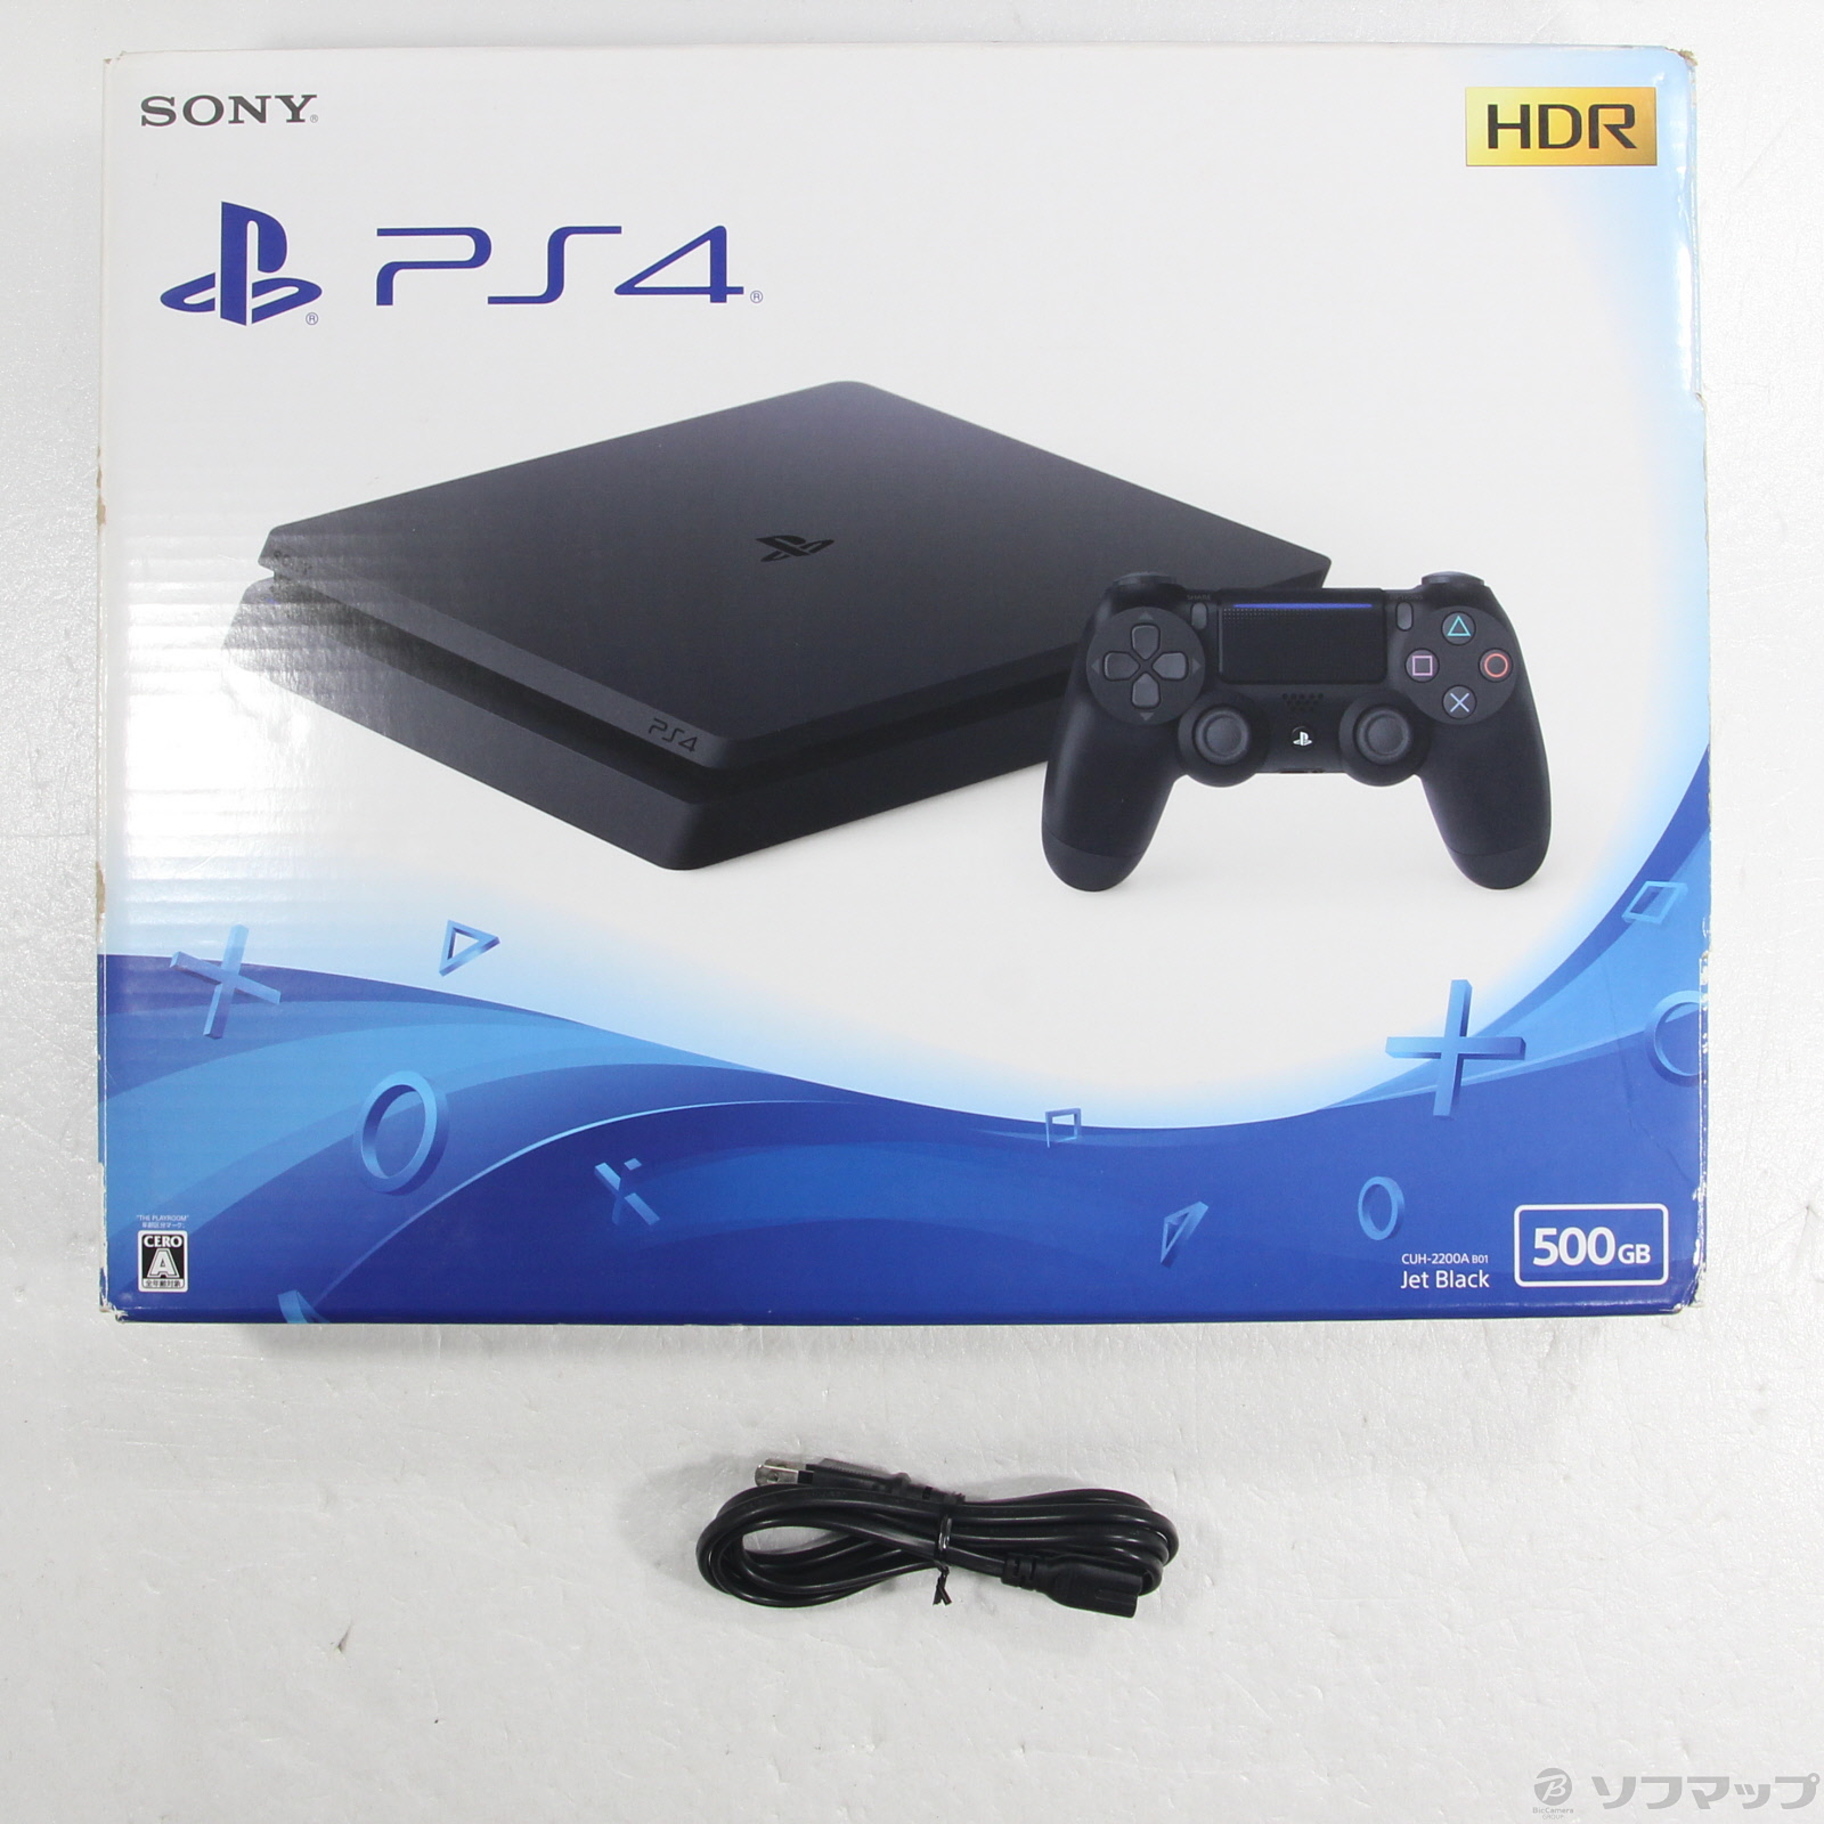 【新品】PS4 CUH-2200AB01 Jet Black 500GB